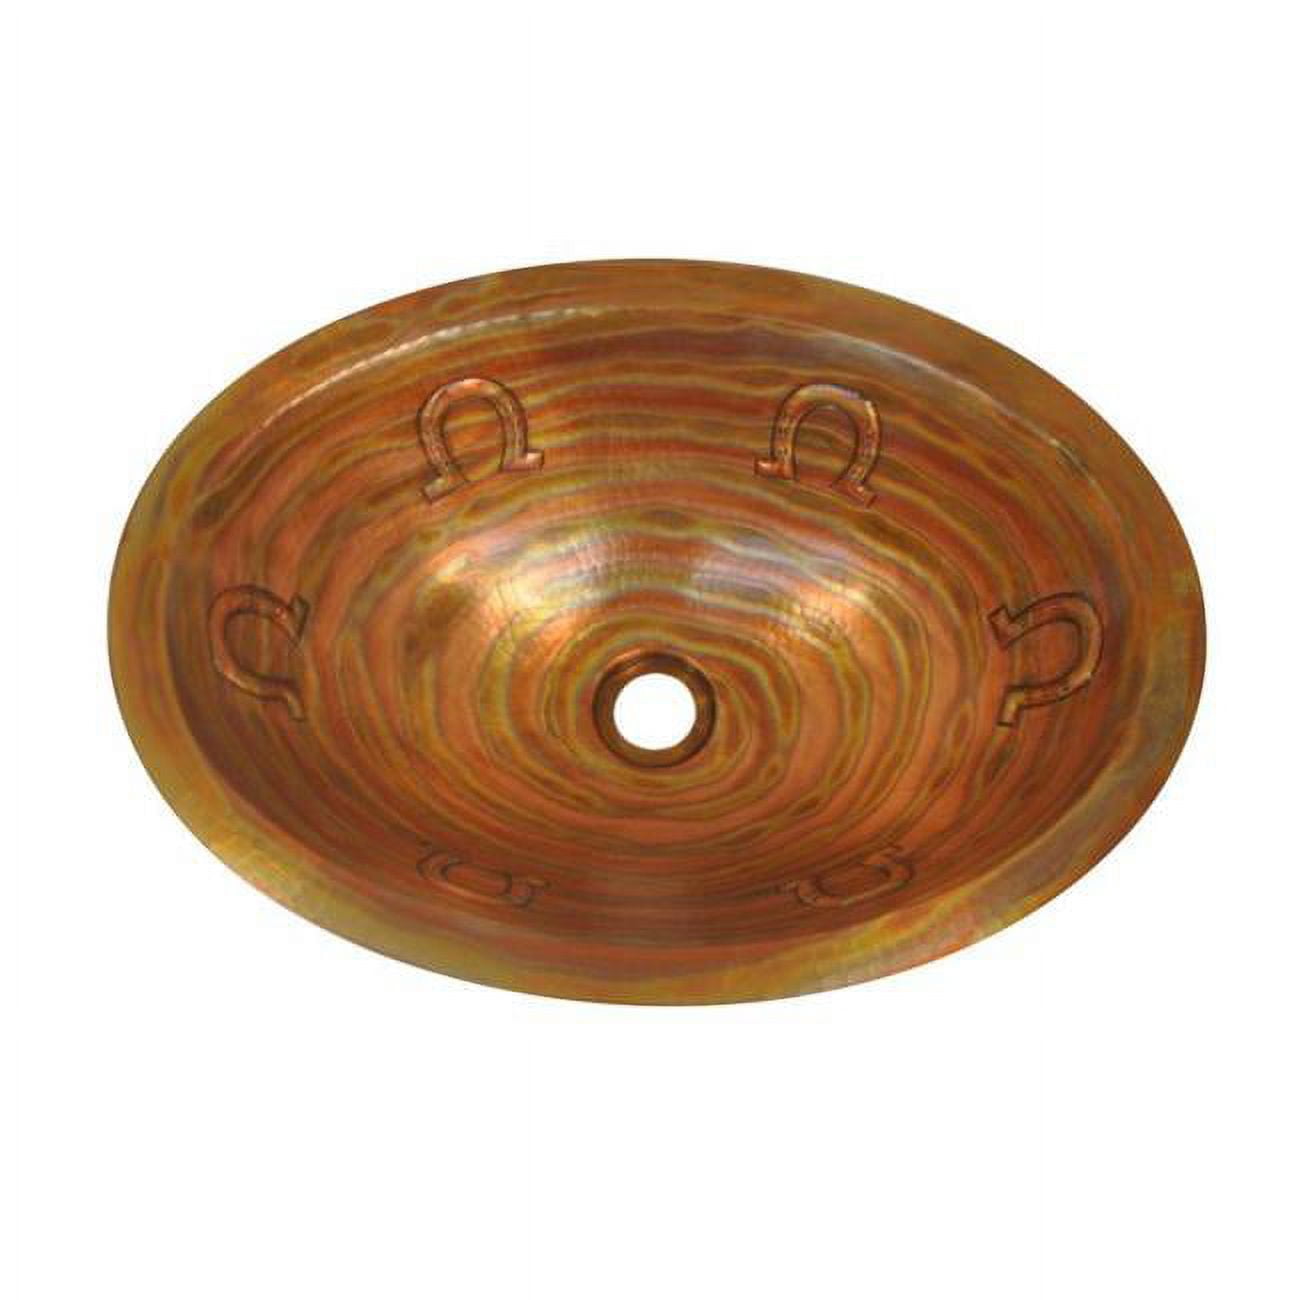 Cos-hs-19-fl-dl Copper Oval Bath Sink, Dark Light - Horseshoe Design - 6 X 14 X 19 In.